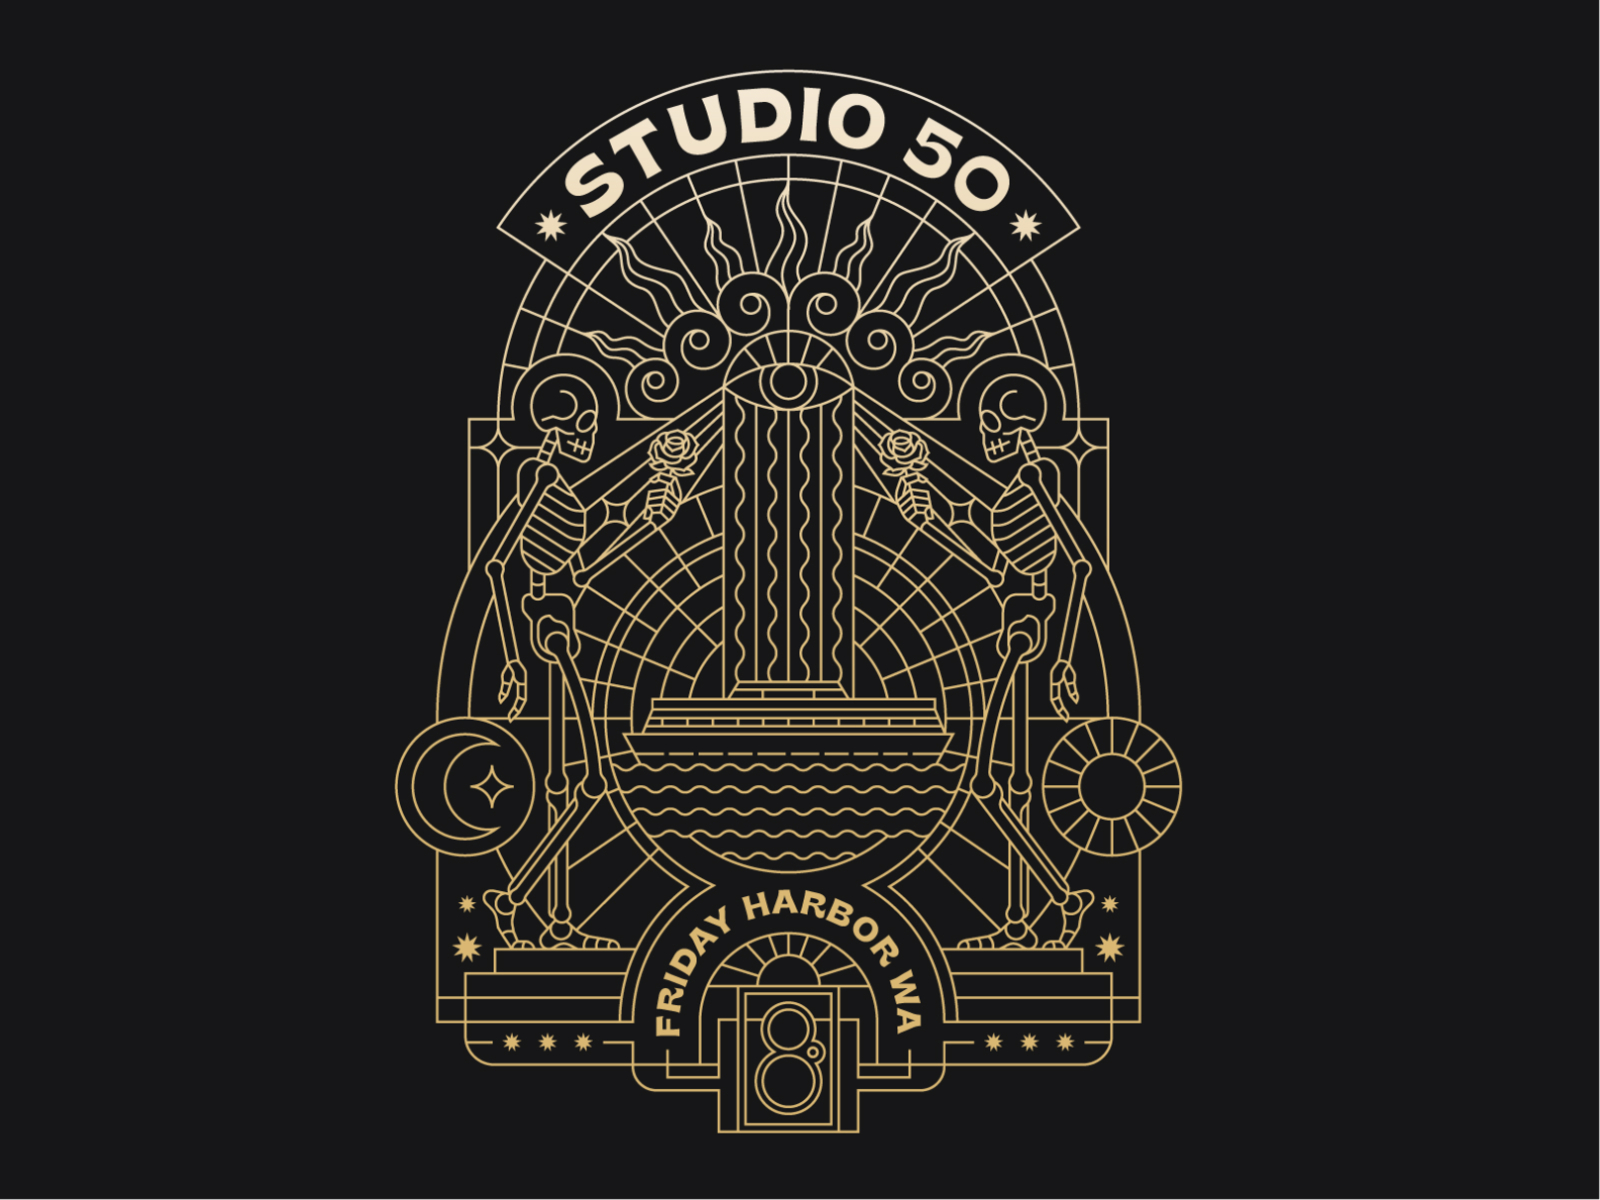 STUDIO 50 2 by Muhammad Bagus Prasetyo for Skilline Design Co. on Dribbble